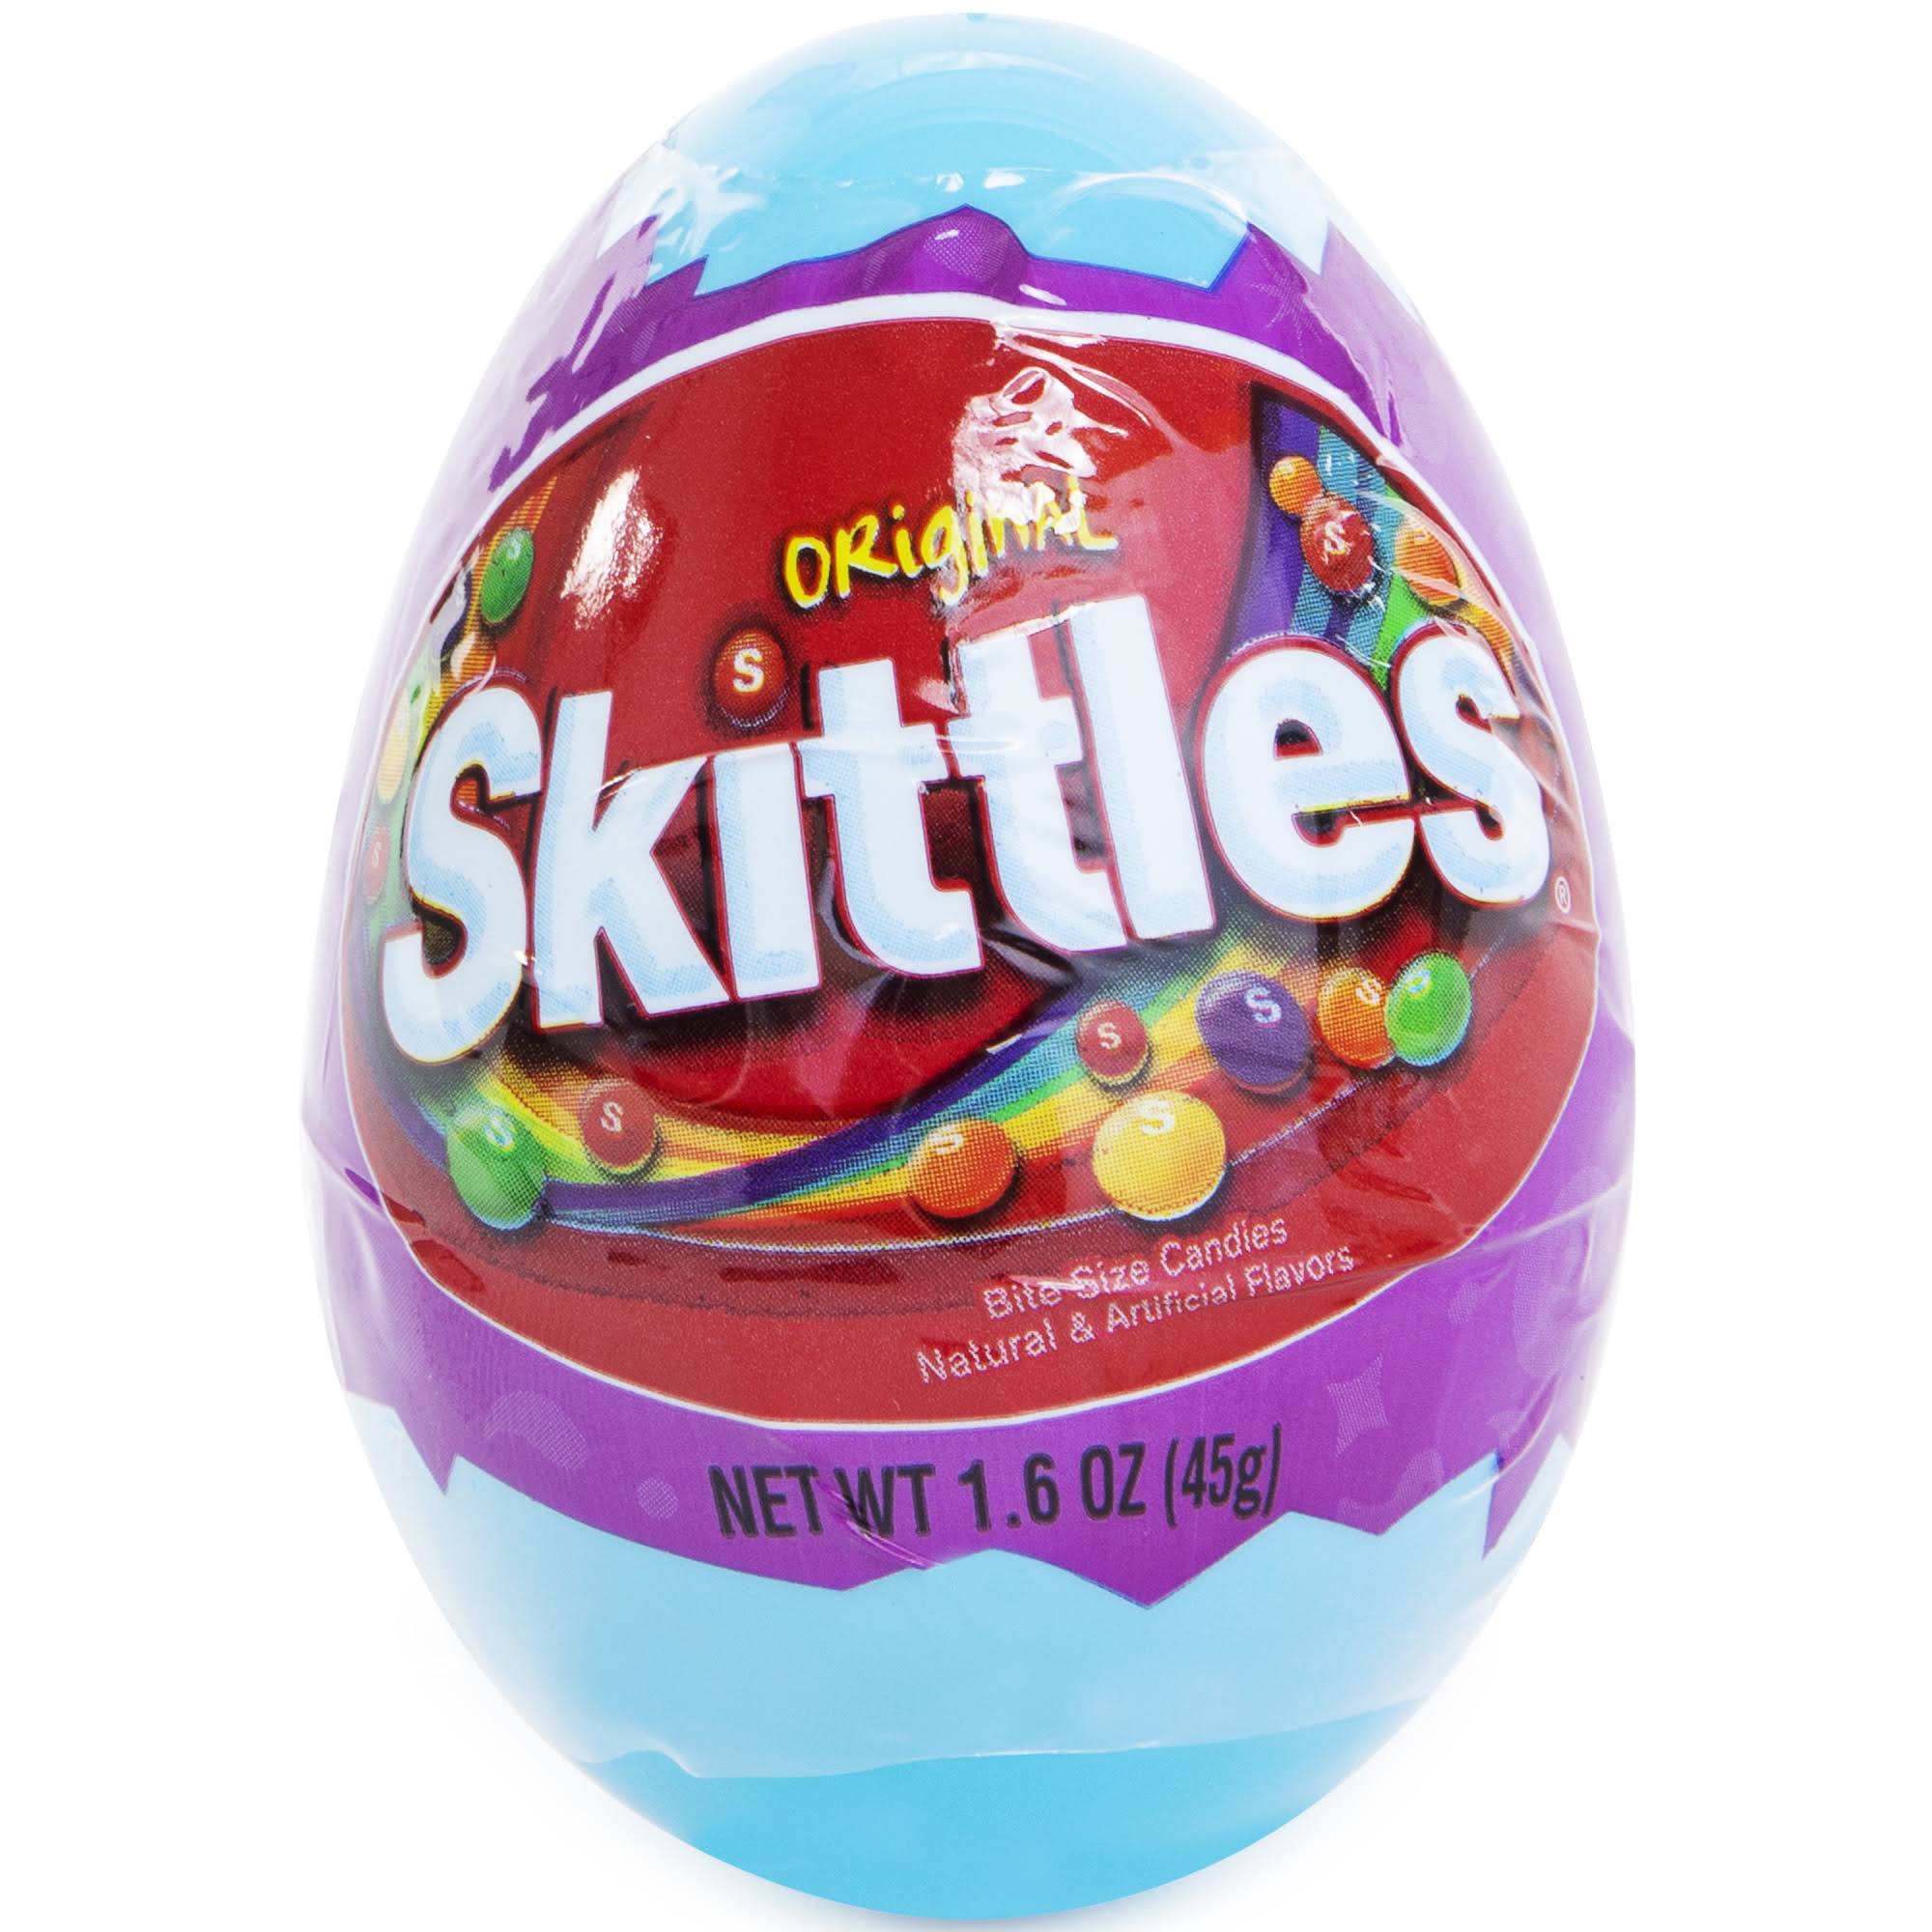 Skittles Original Candy Filled Egg - 1.6oz